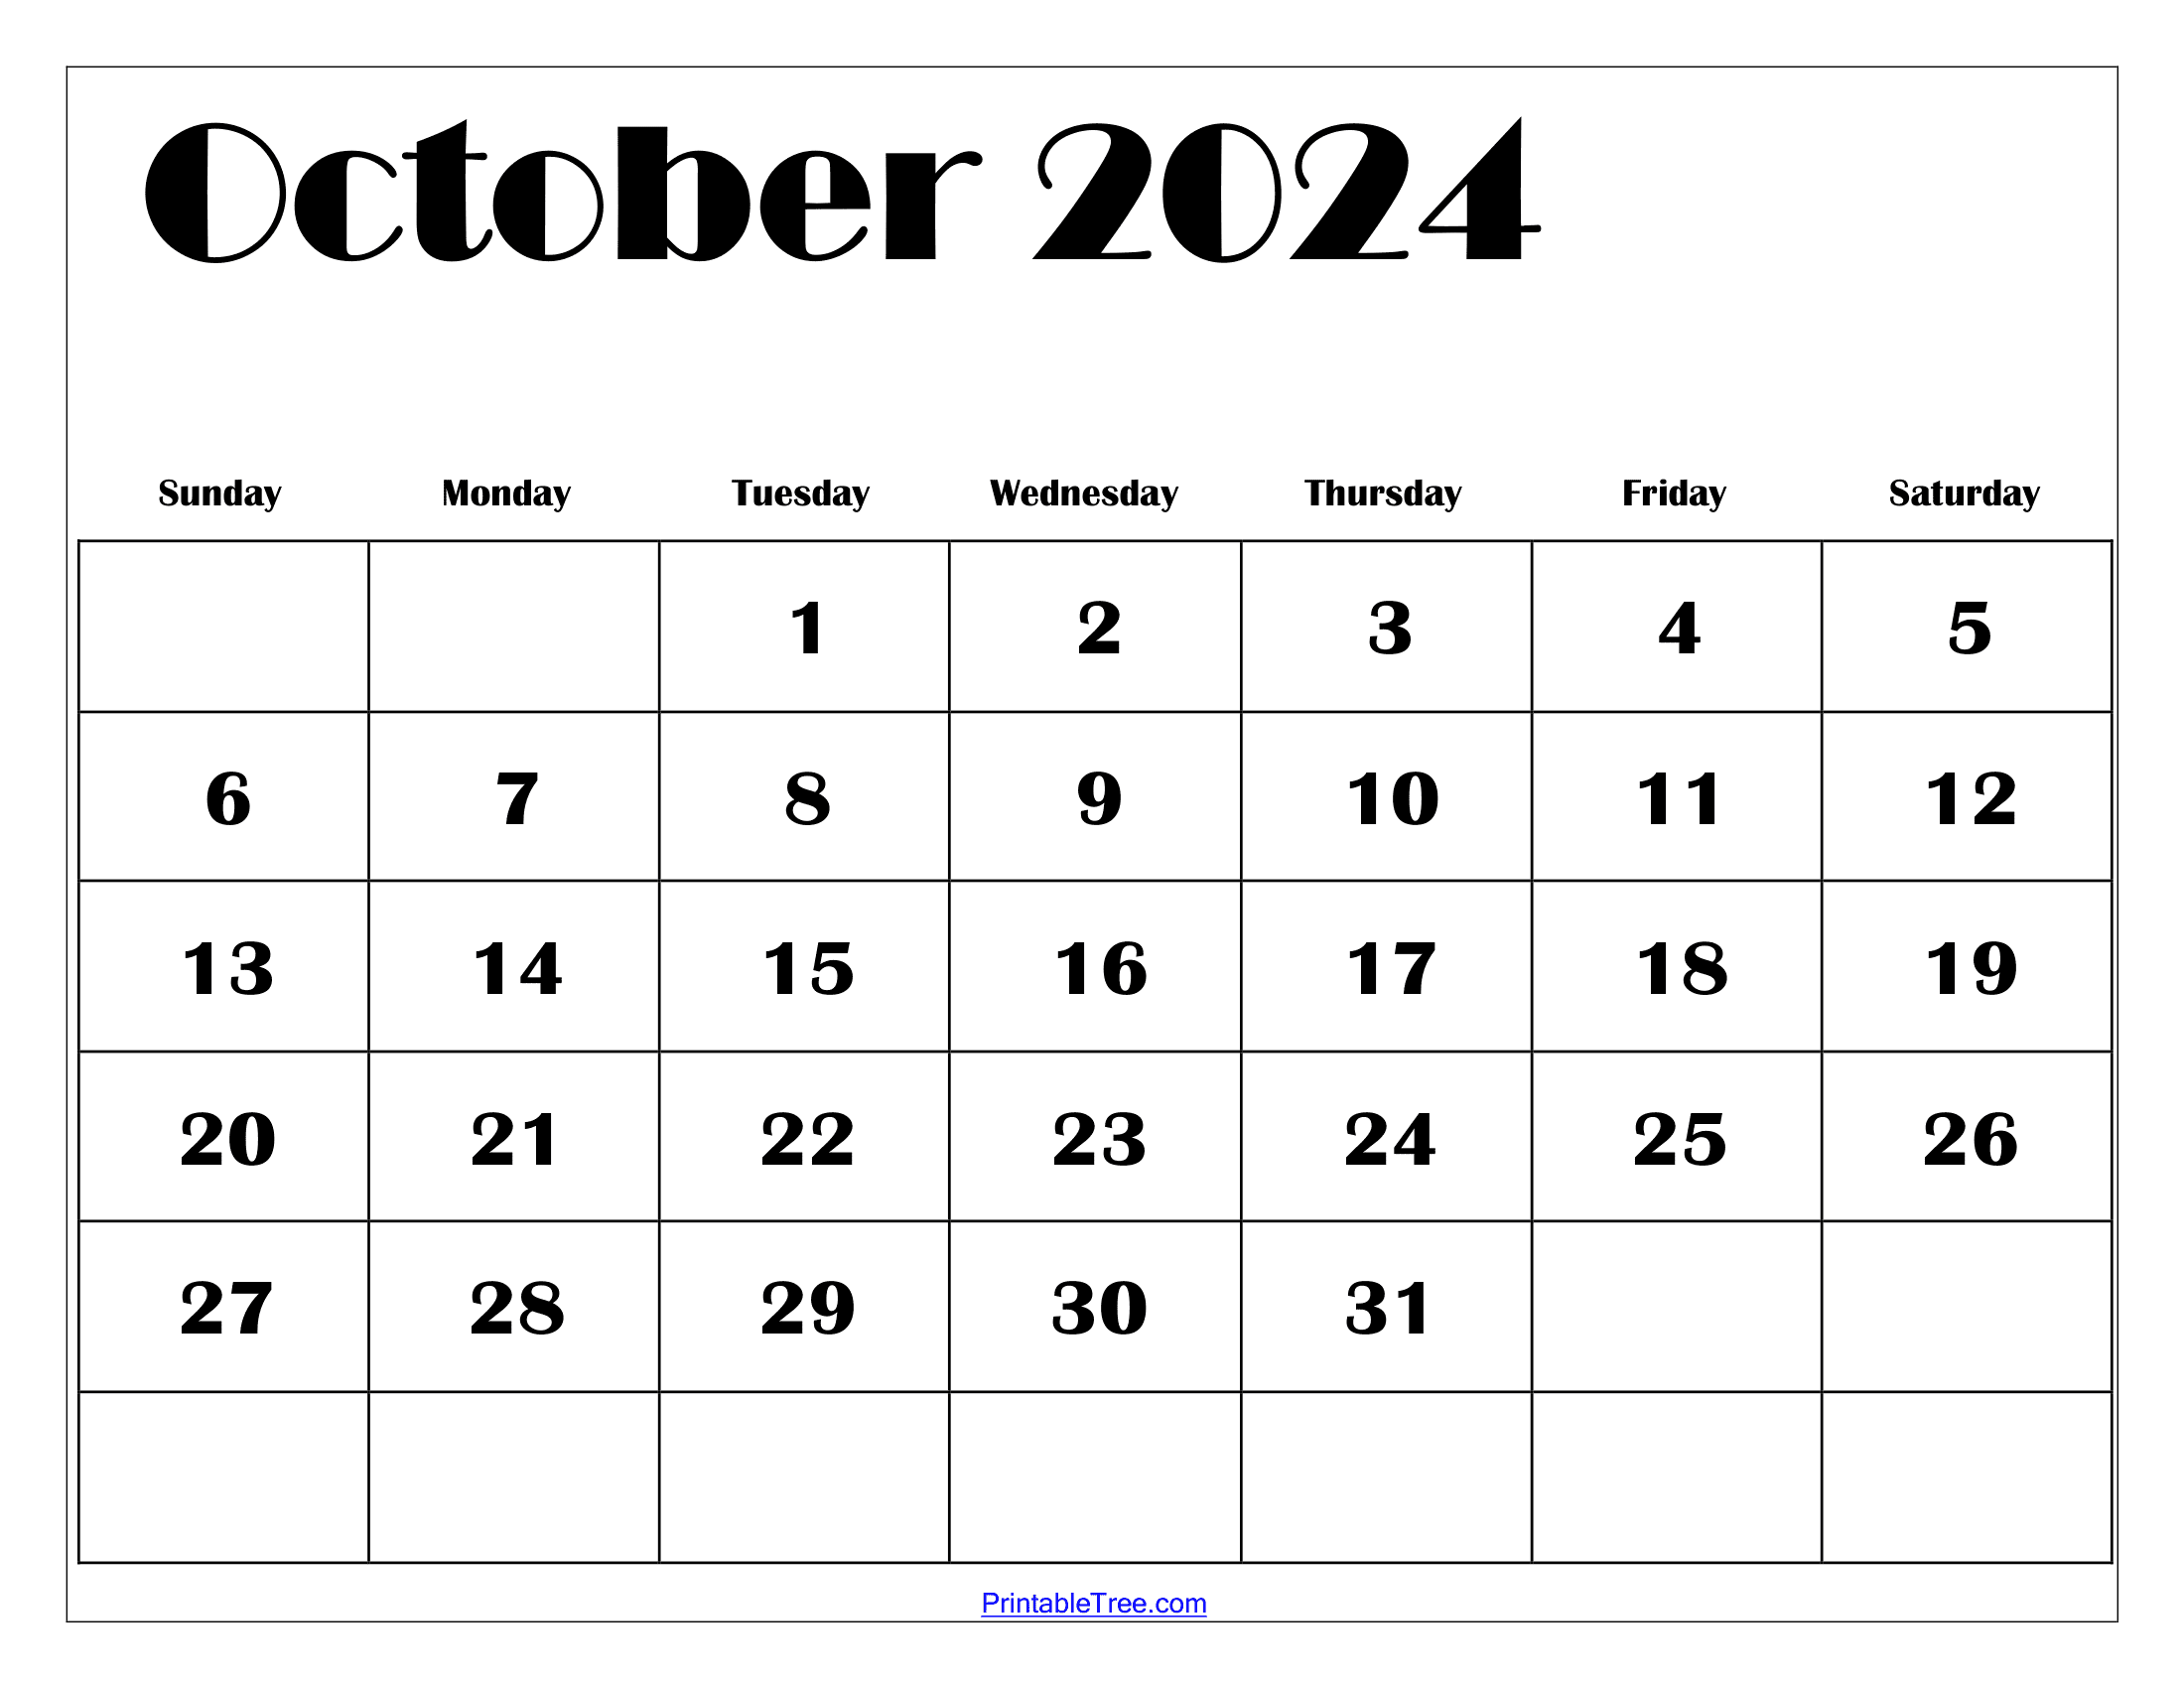 October 2024 Calendar Printable Pdf Free Templates With Holidays for October 2024 Printable Calendar